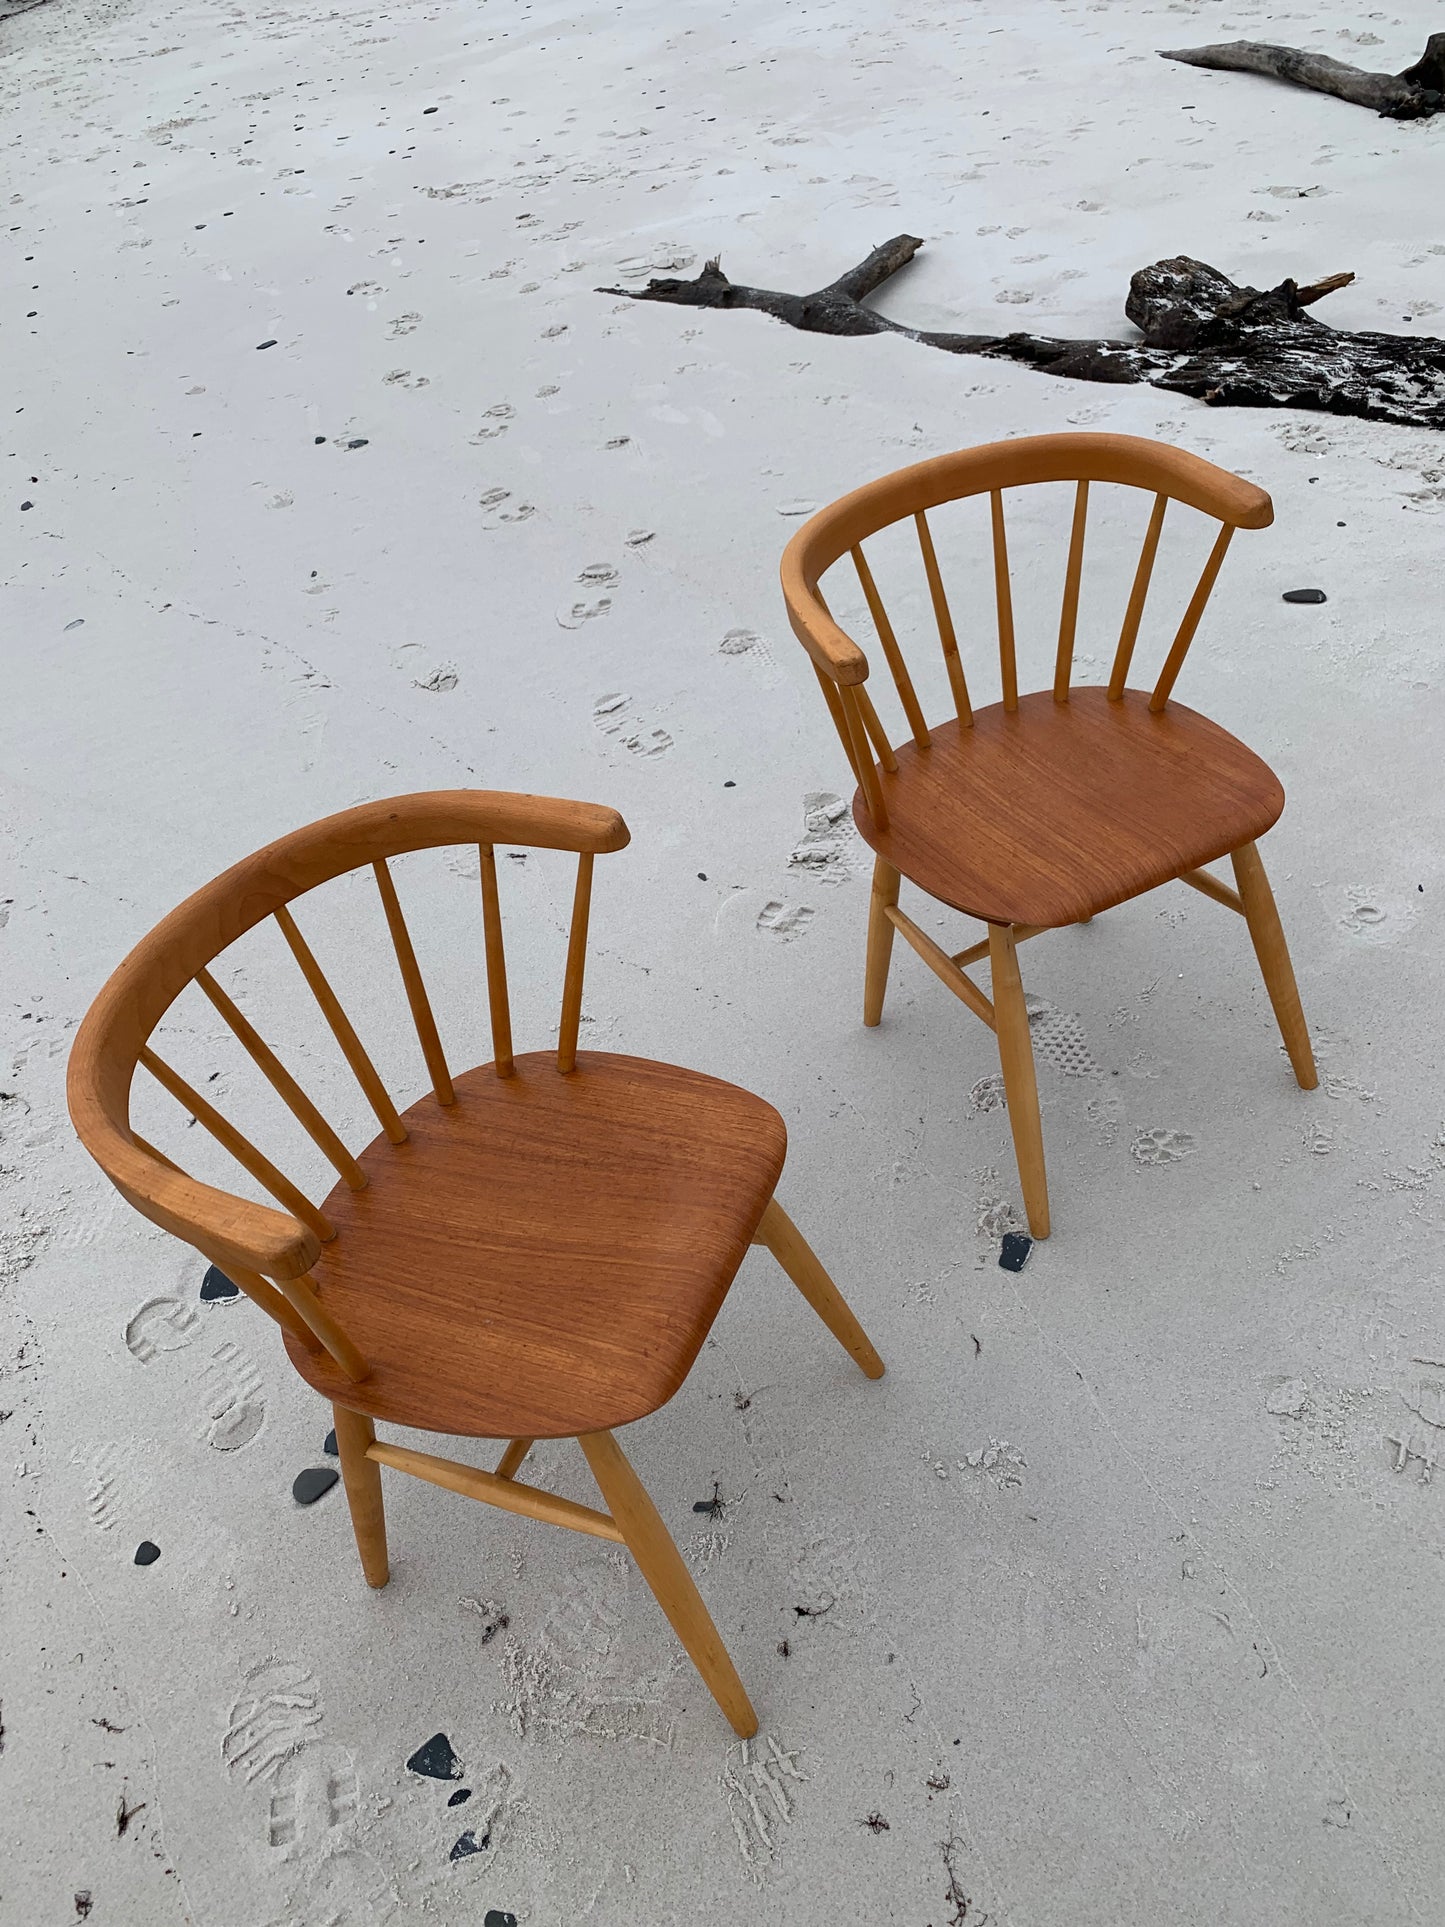 Kinderstühle (zwei Stühle)